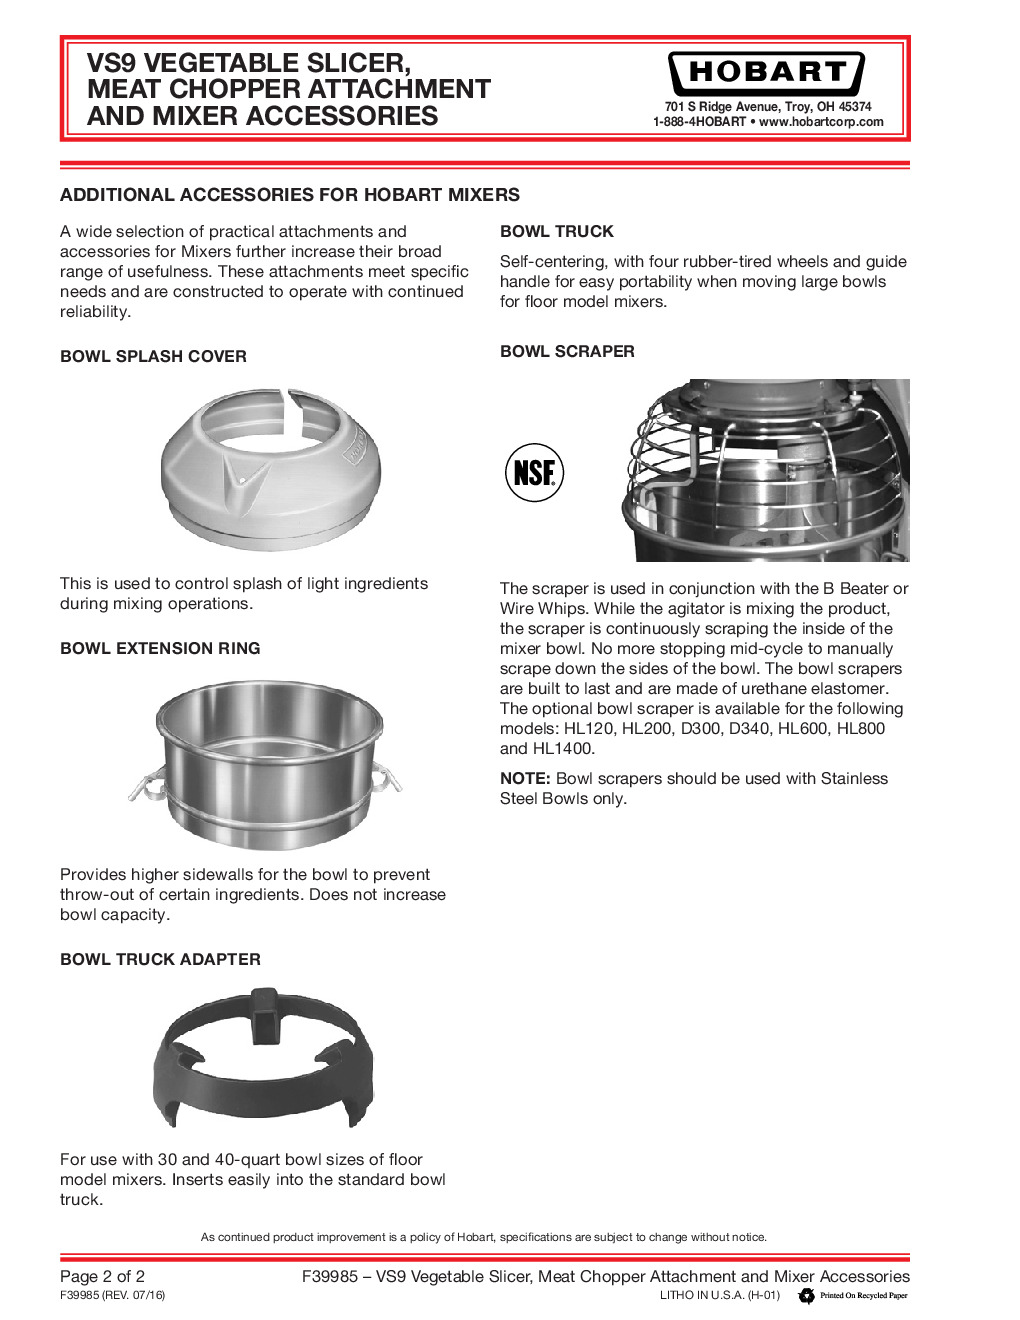 Hobart VS9-12 Vegetable Cutter Attachment, 9” Vegetable Slicer for #12 Attachment Hub; Includes Back Case